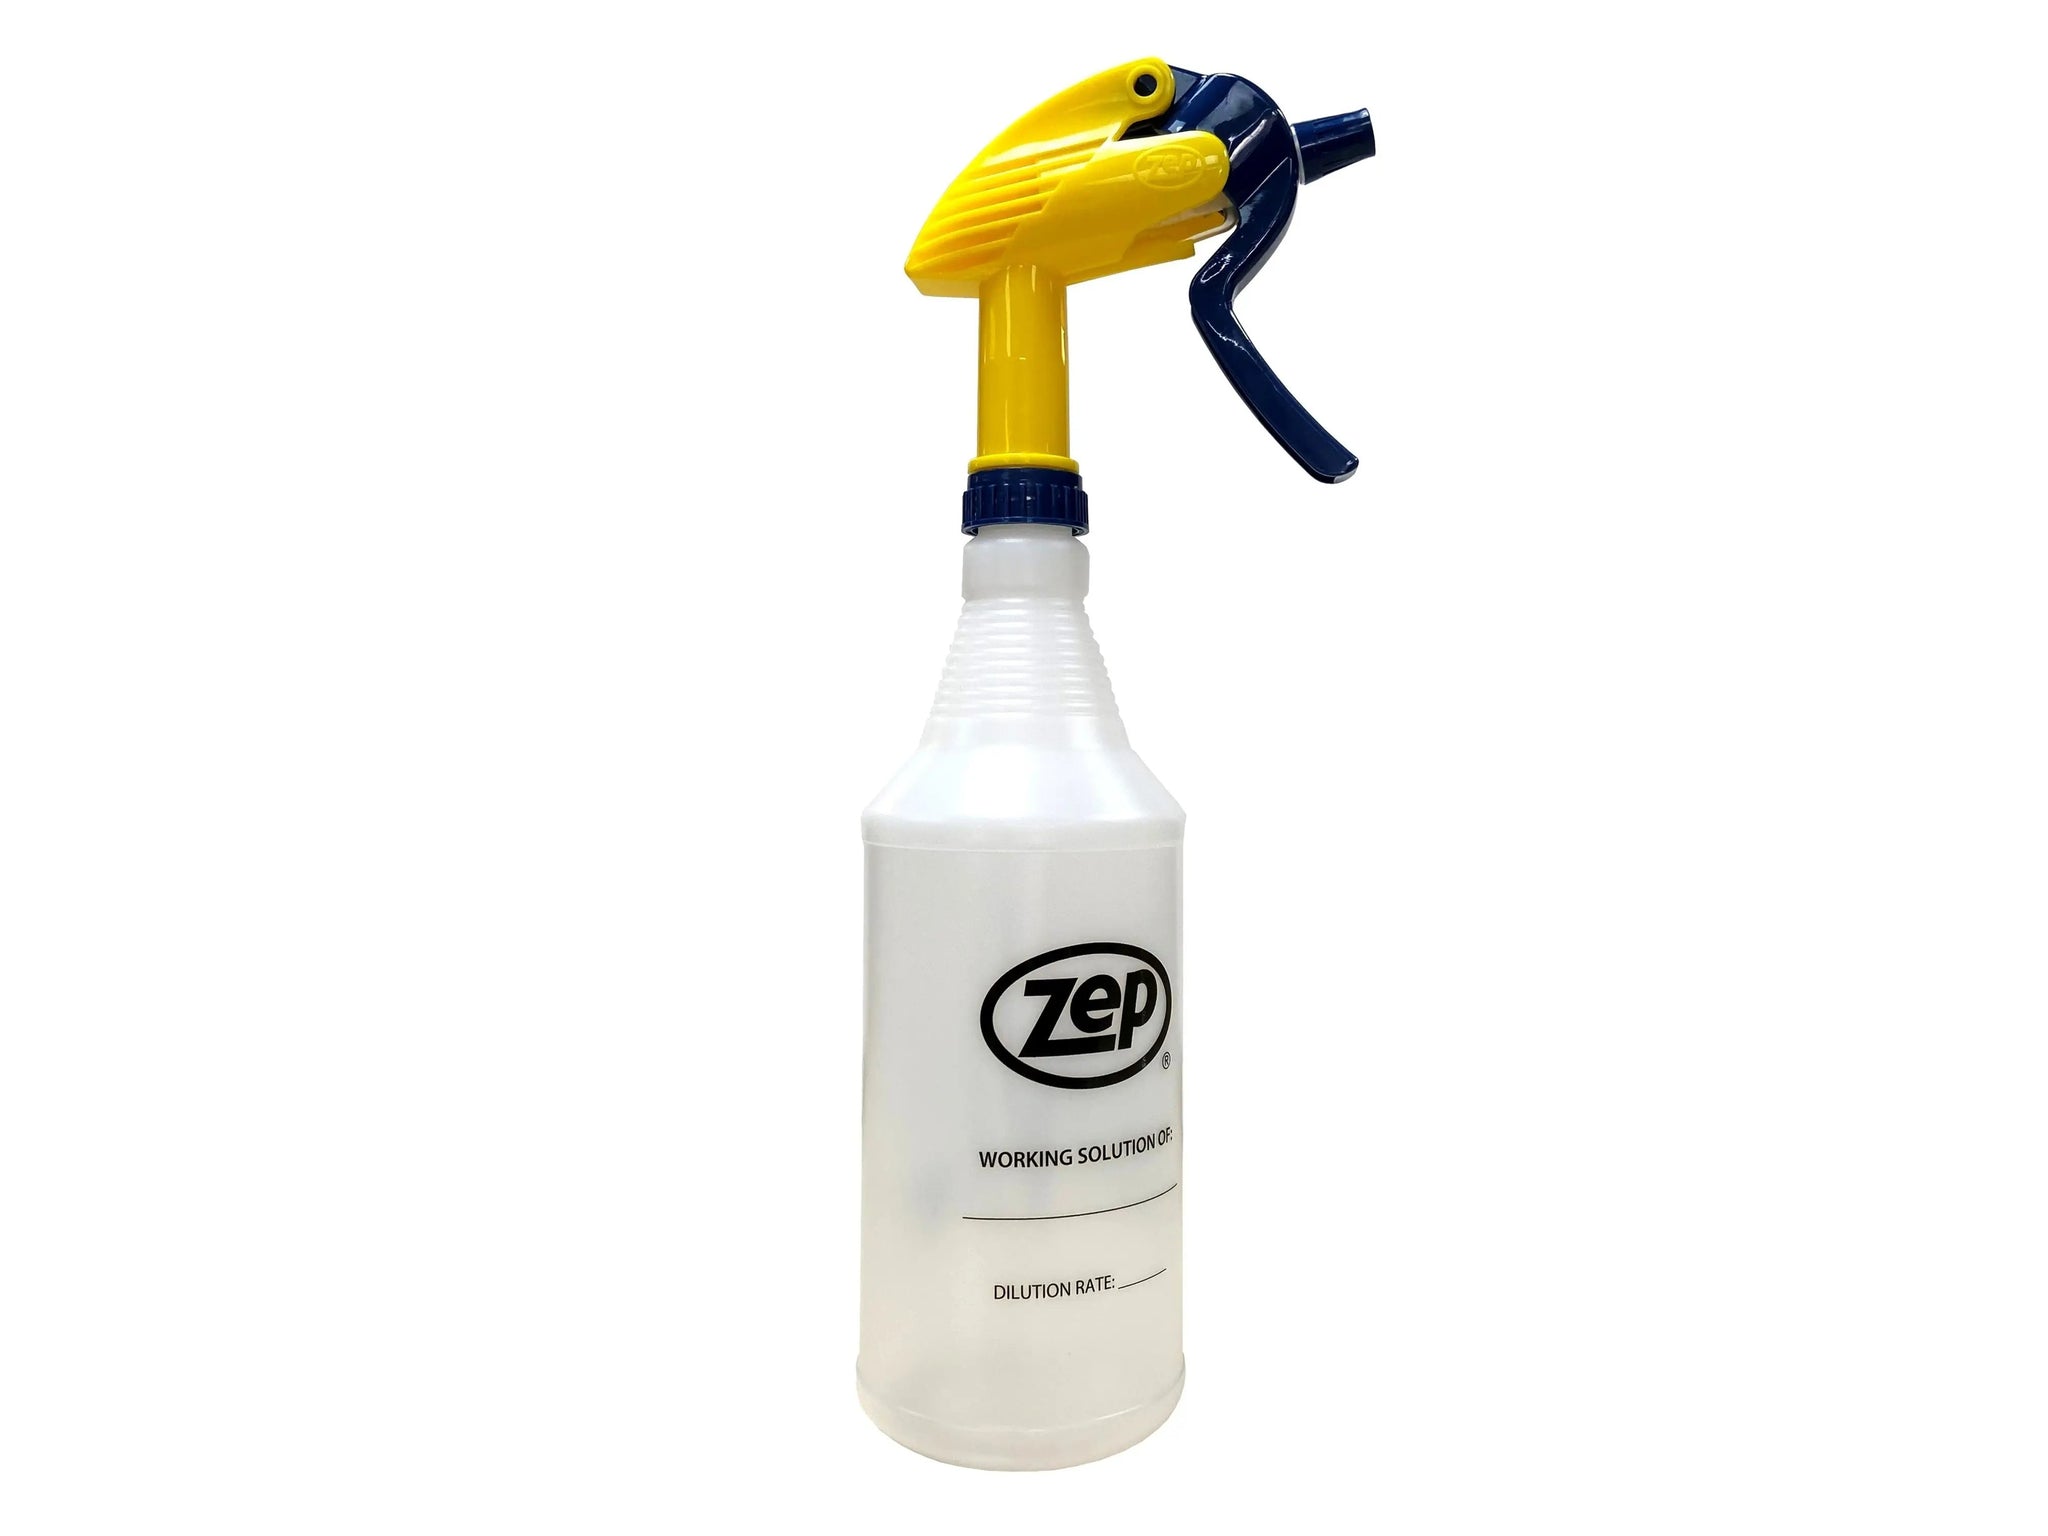 Spray Bottle with Trigger Sprayer (32 oz.)